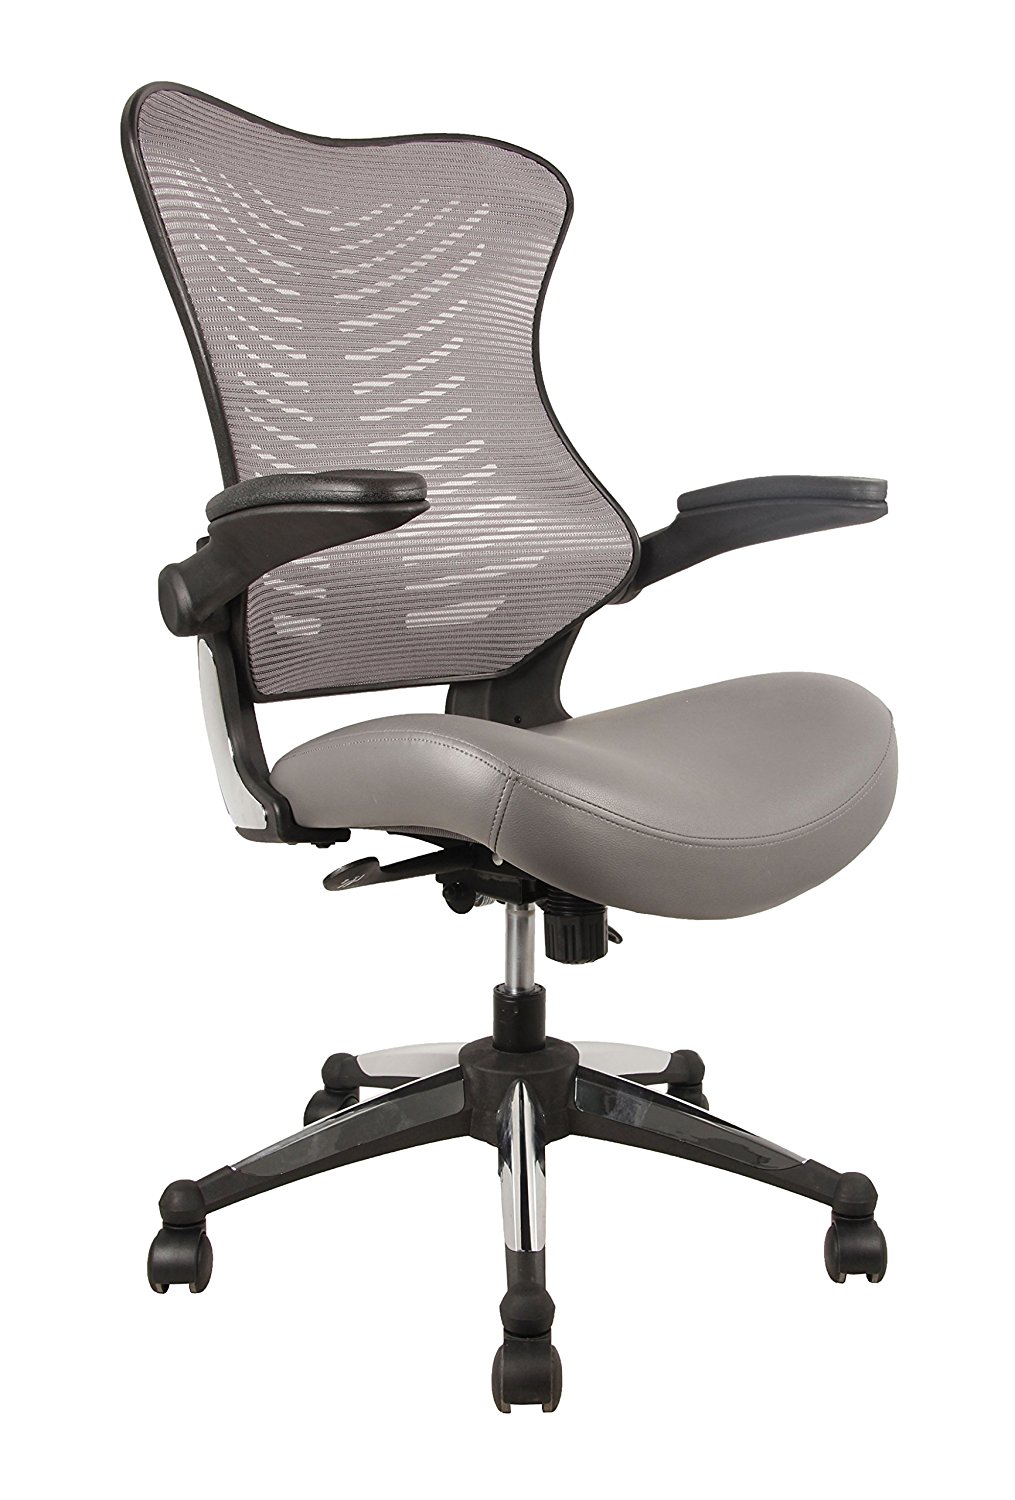 Office Factor Executive Ergonomic Chair Review - Slant